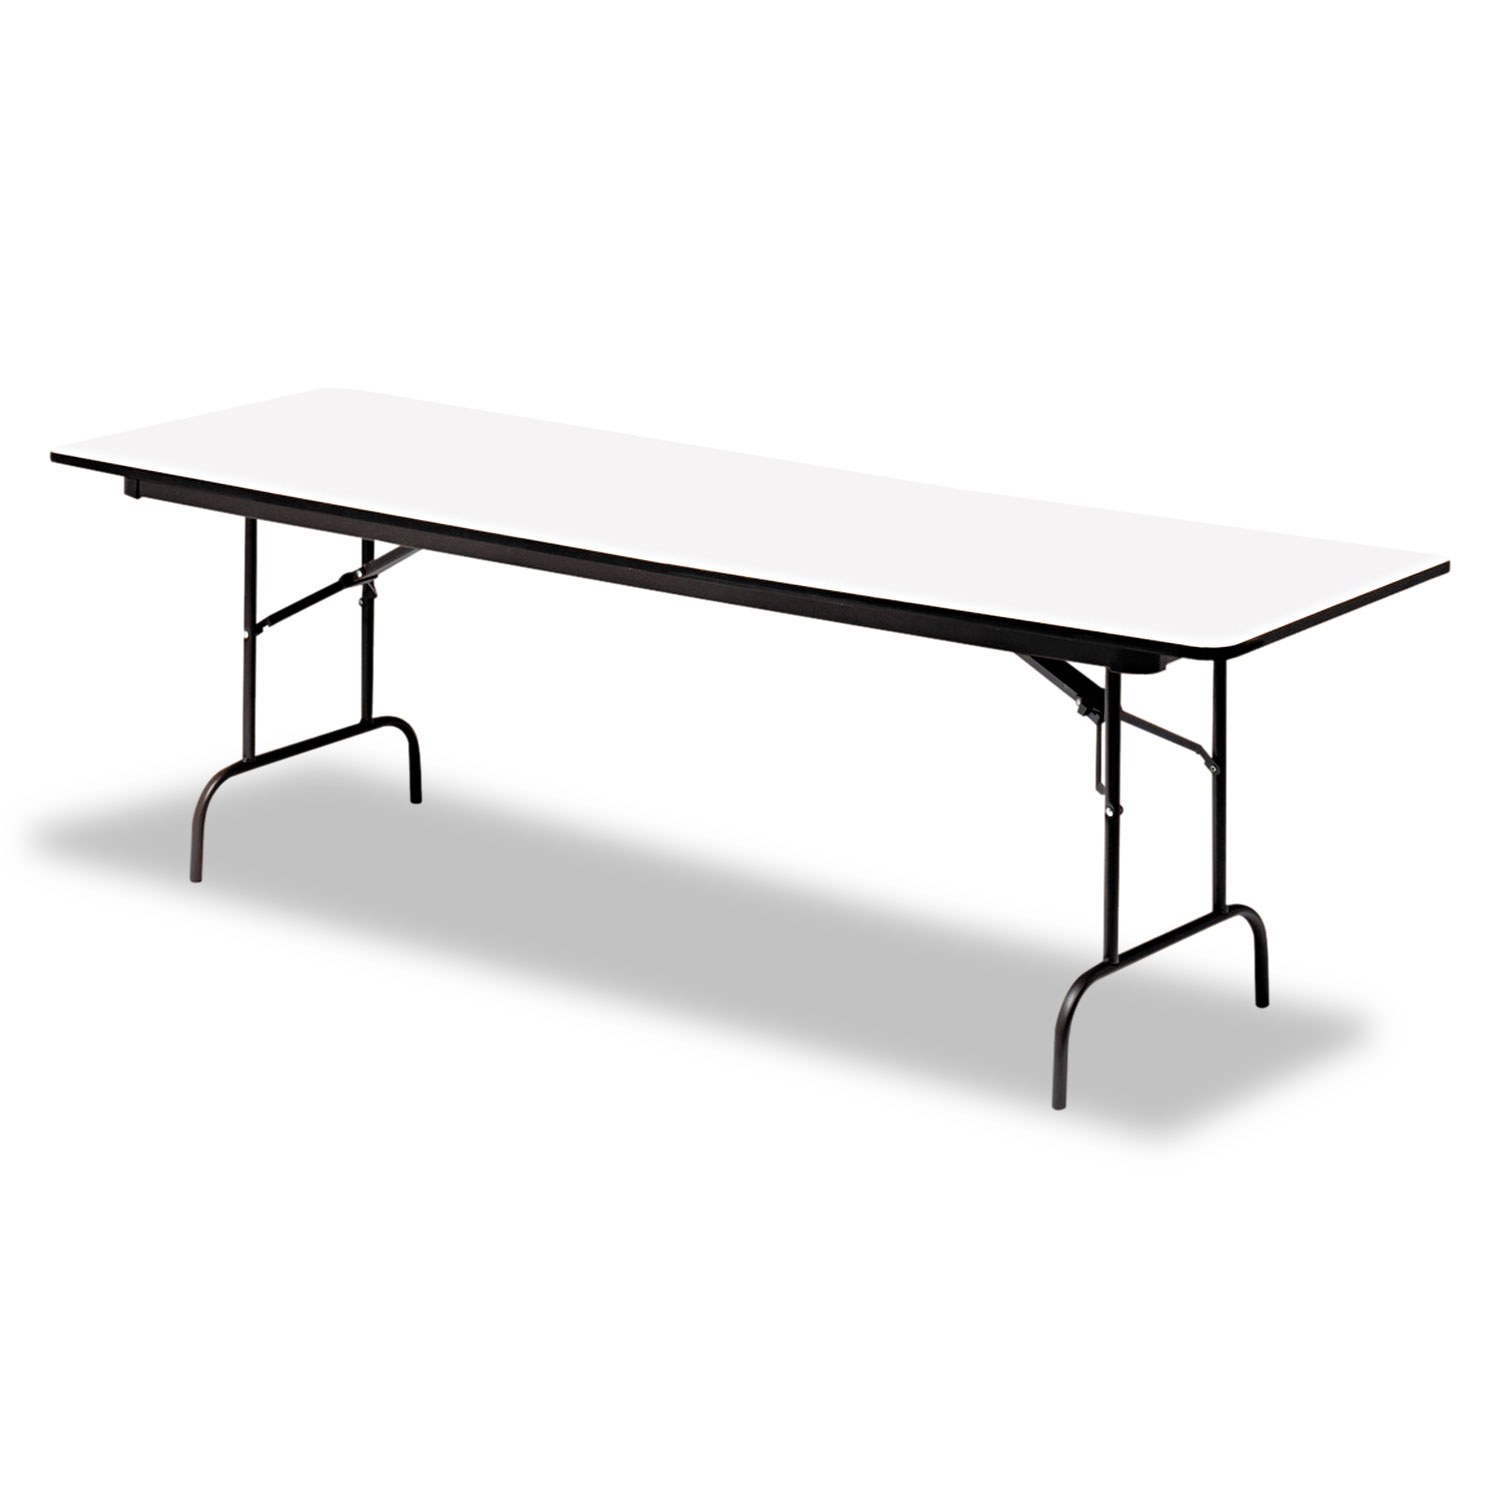  Iceberg 55217 Premium Wood Laminate Folding Table, Rectangular, 60w x 30d x 29h, Gray/Charcoal (ICE55217) 